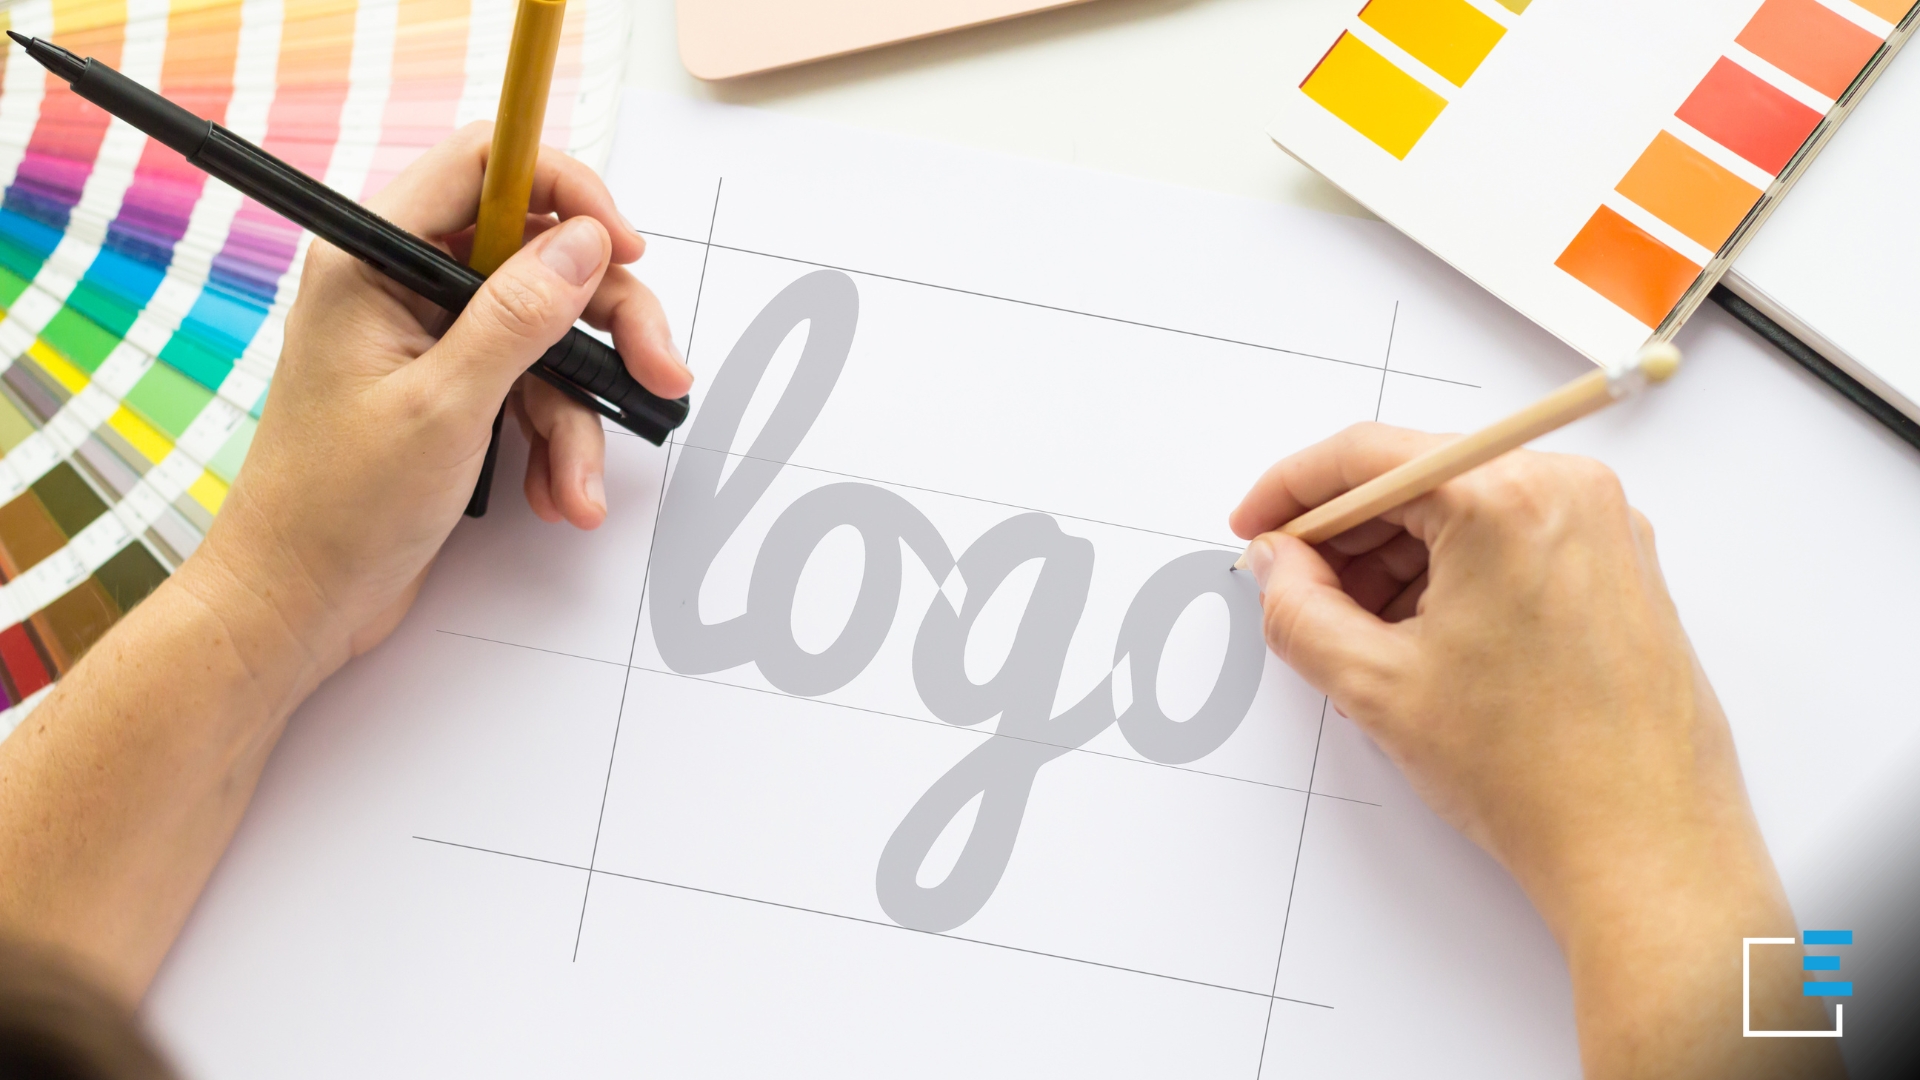 Come creare un logo